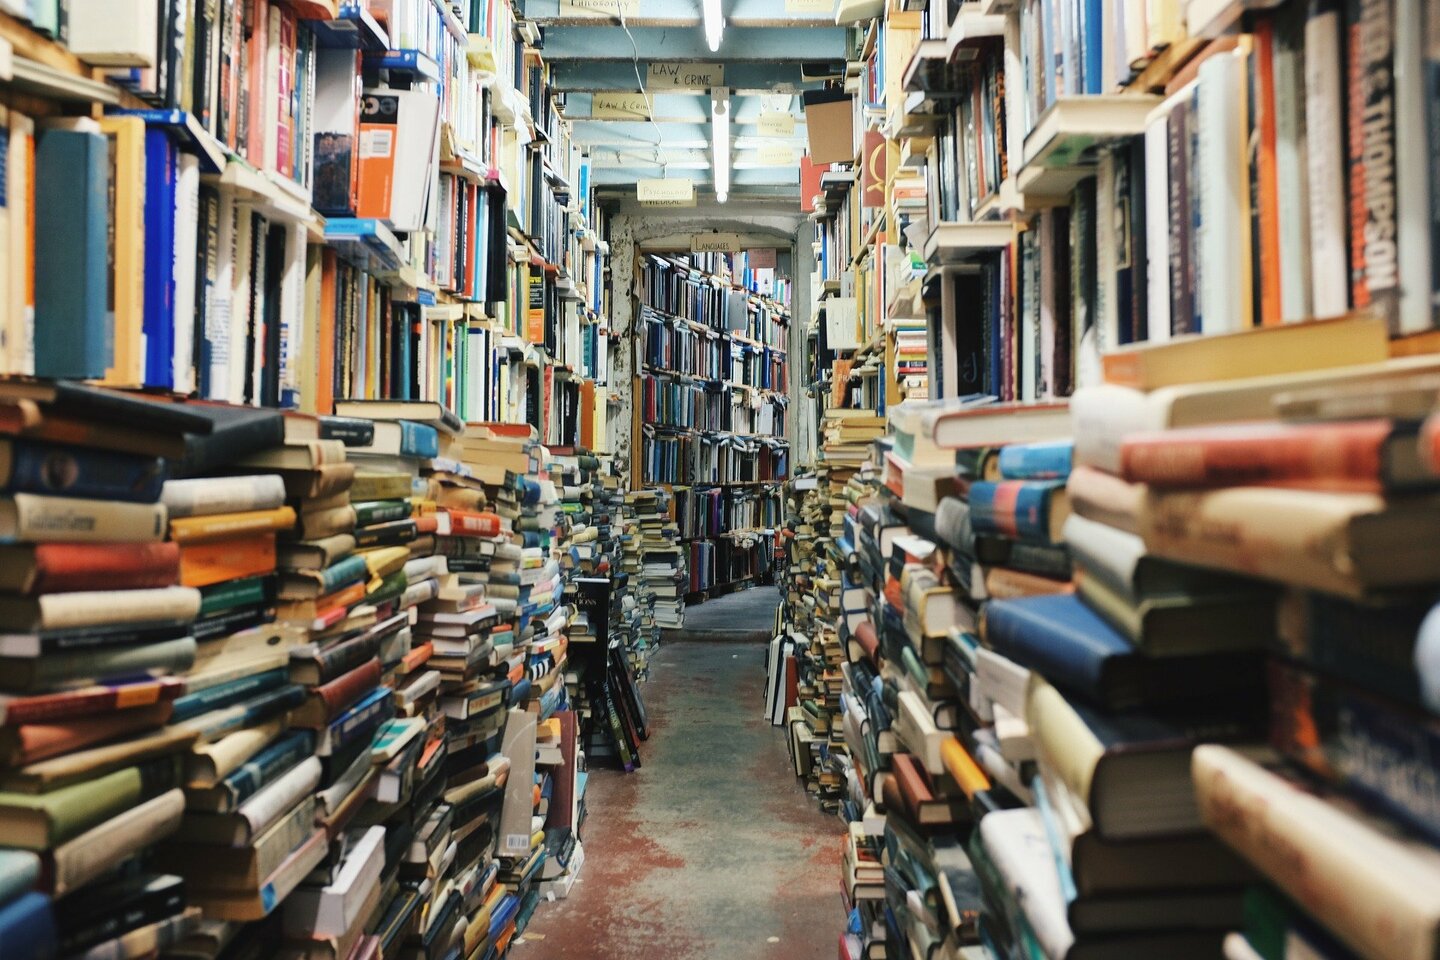 A library aisle between bookshelves full of books